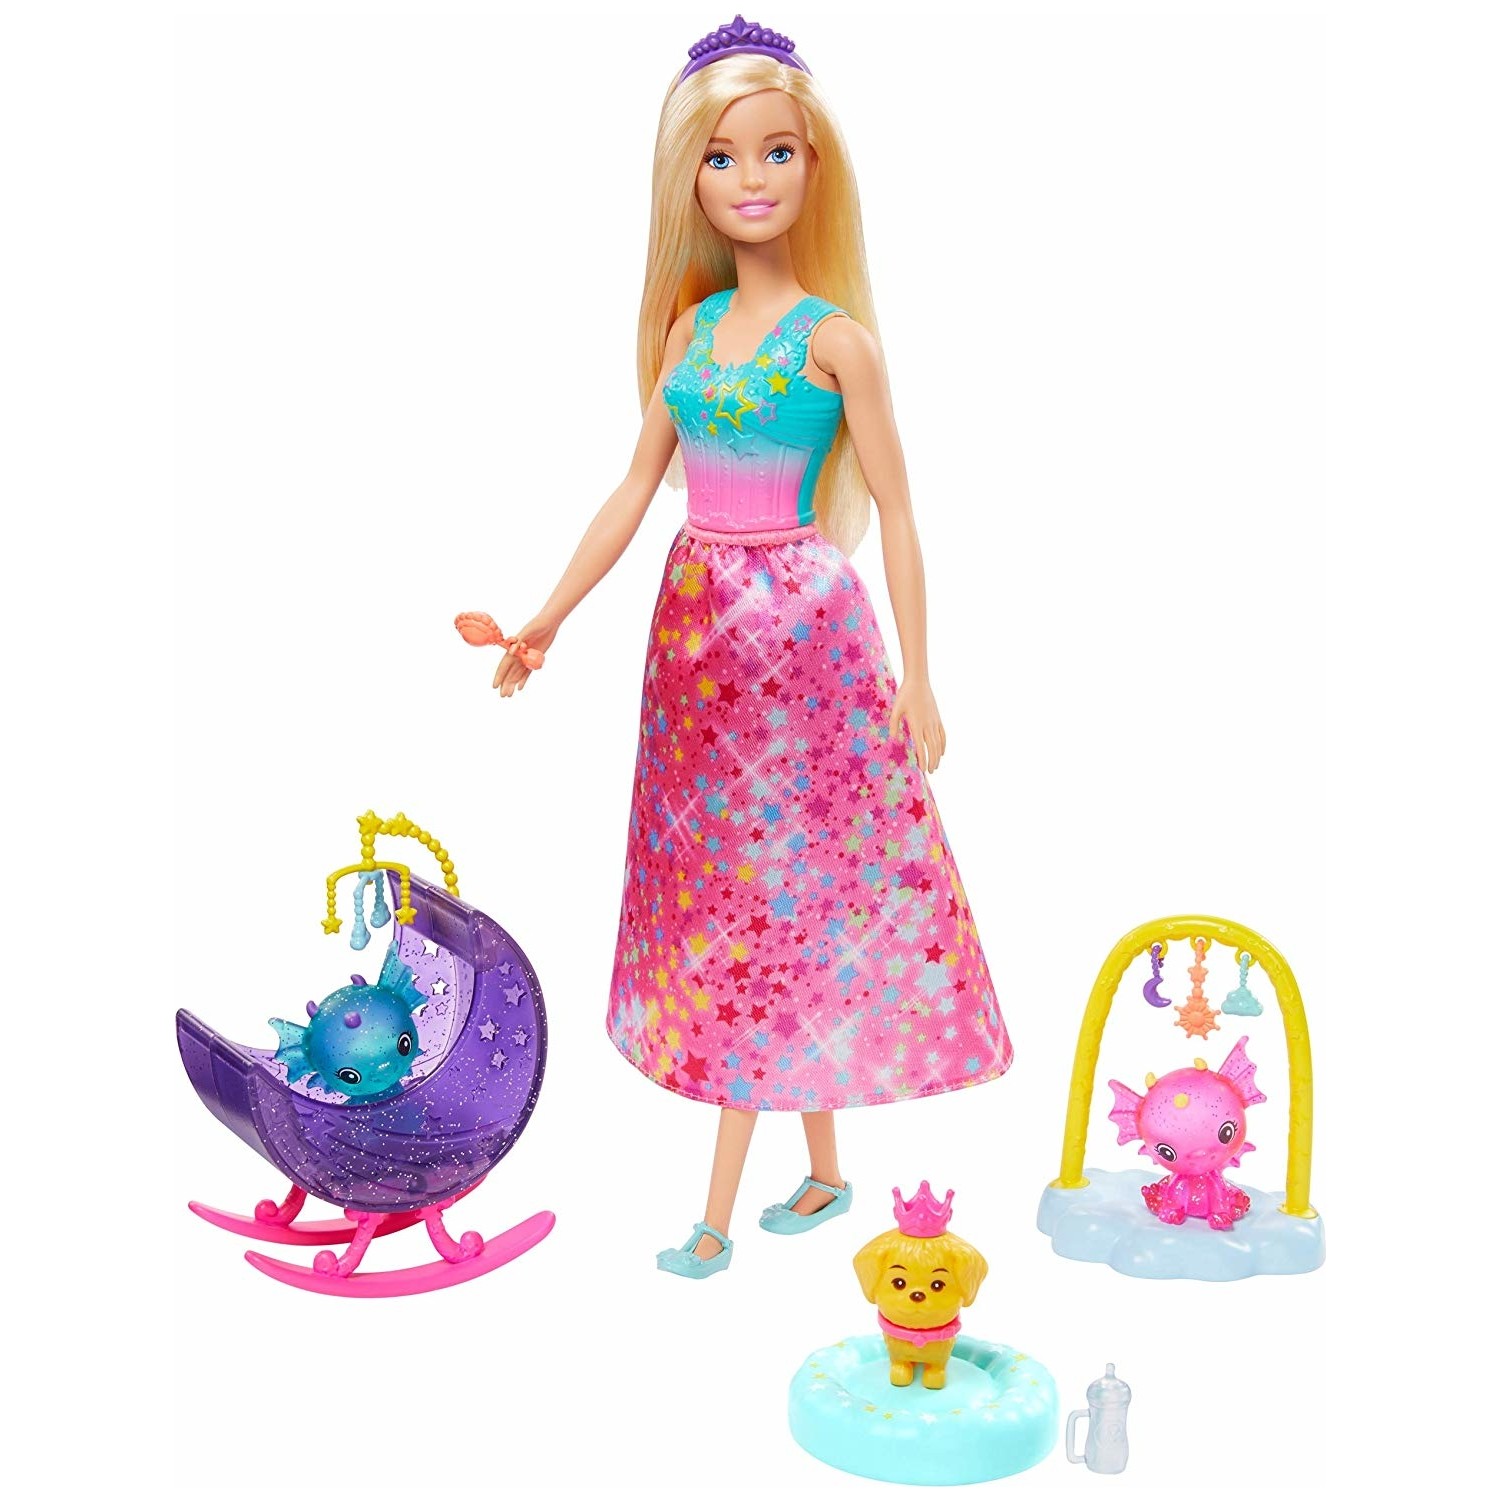 Кукла Barbie Dreamtopia Princess Doll and Accessories GJK51 кукла barbie dreamtopia long hair dolls gtf37